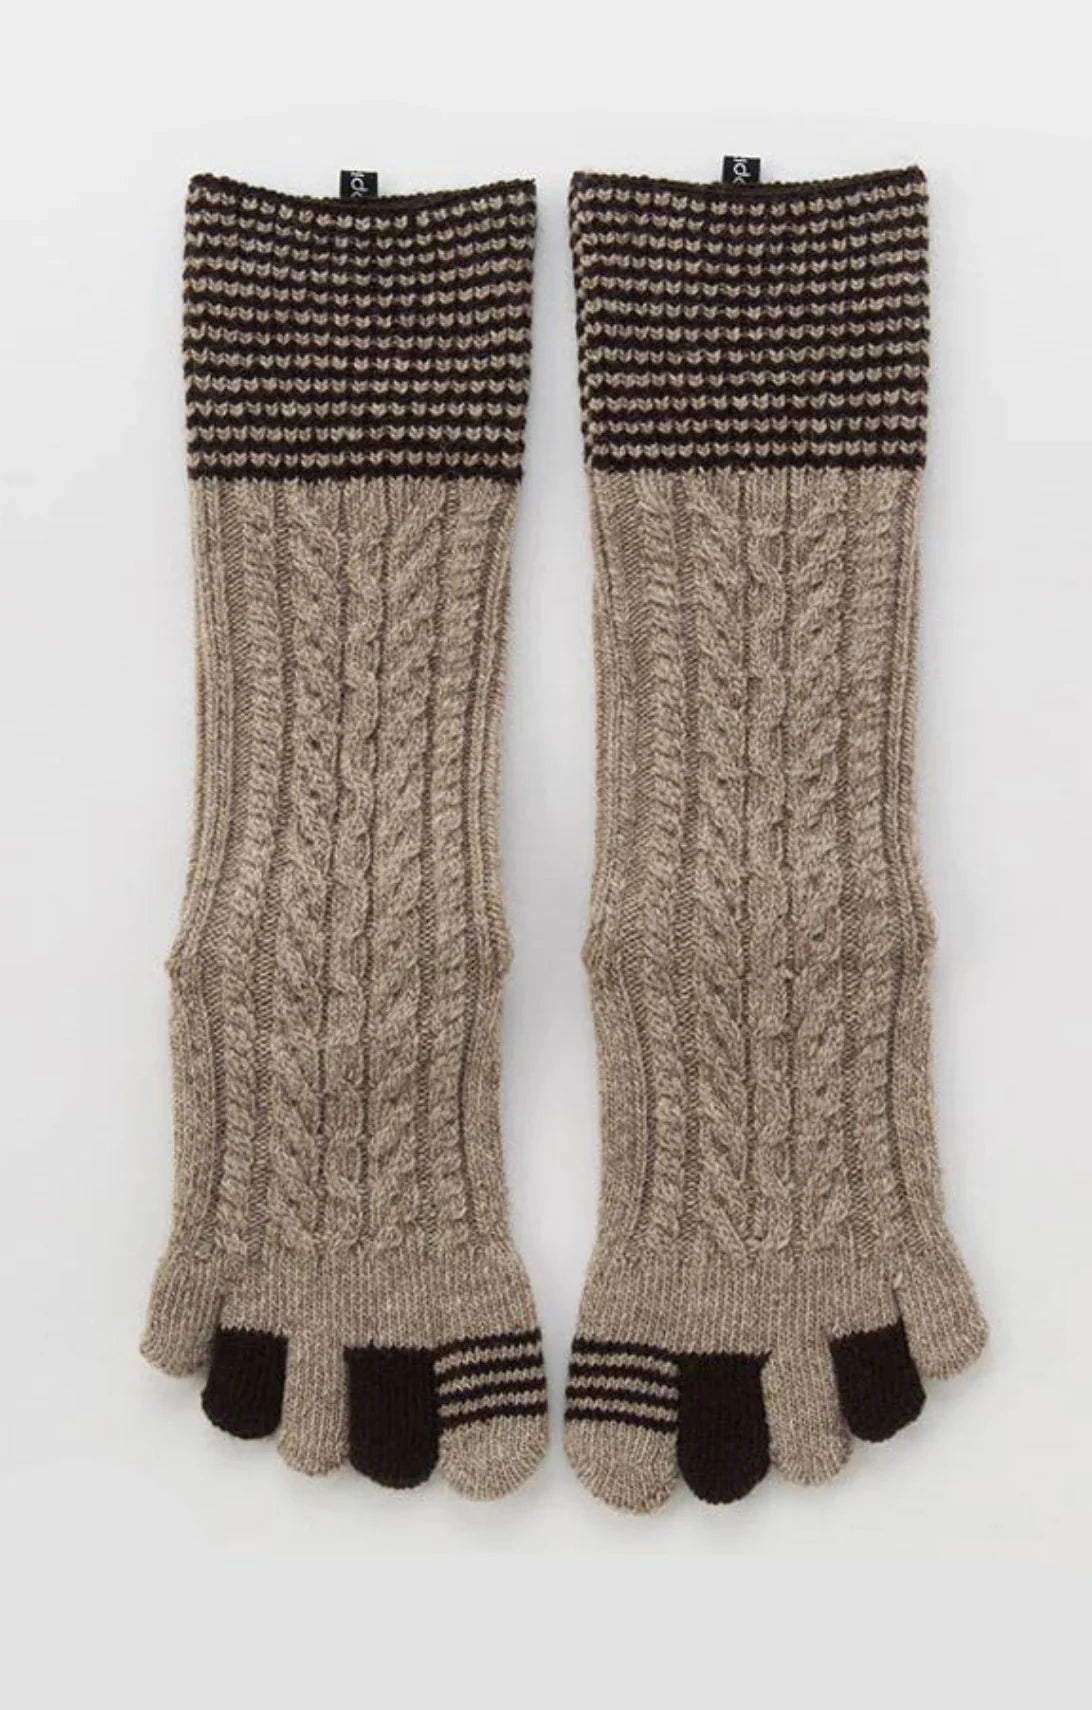 Knitido Biwa Cotton Toe Socks, colourful patterned cotton toe